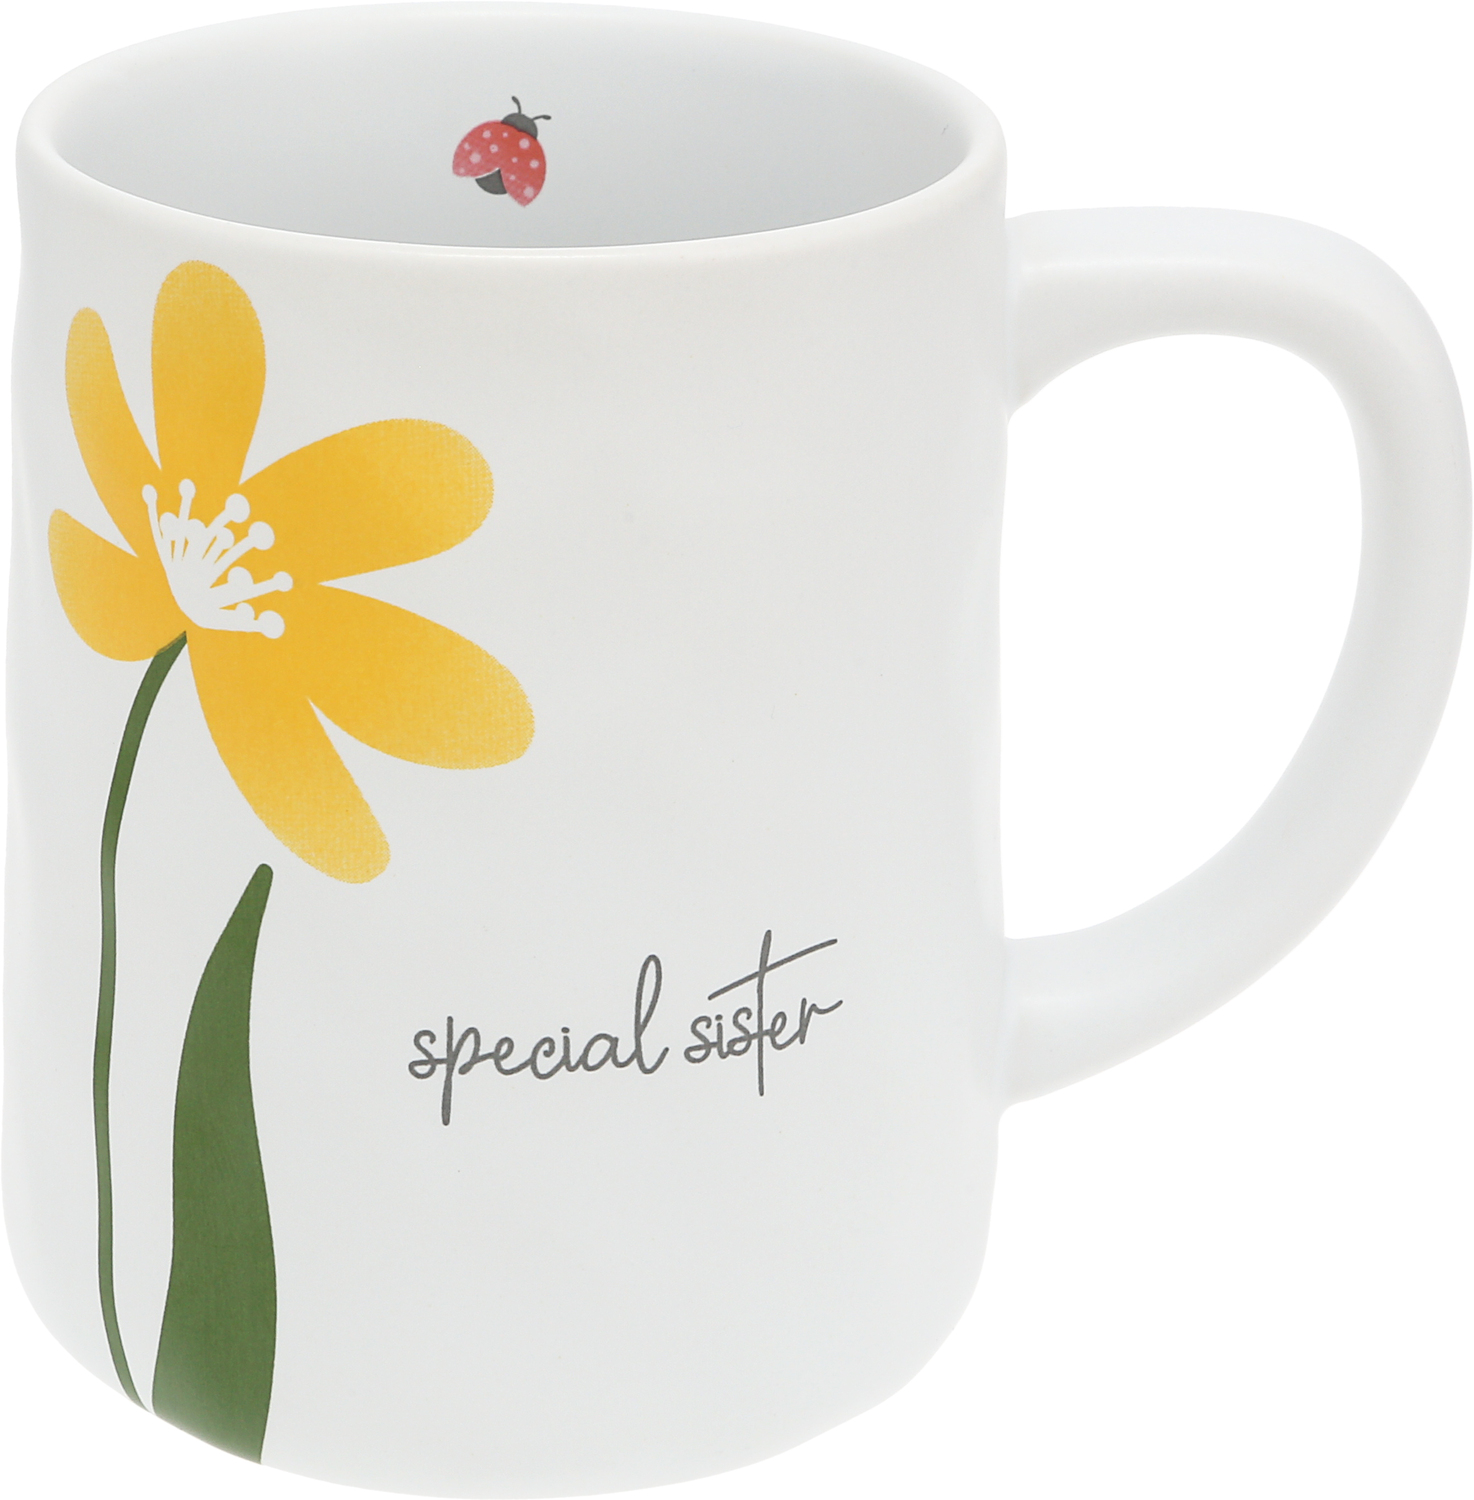 Special Sister by Grateful Garden - Special Sister - 17 oz Mug